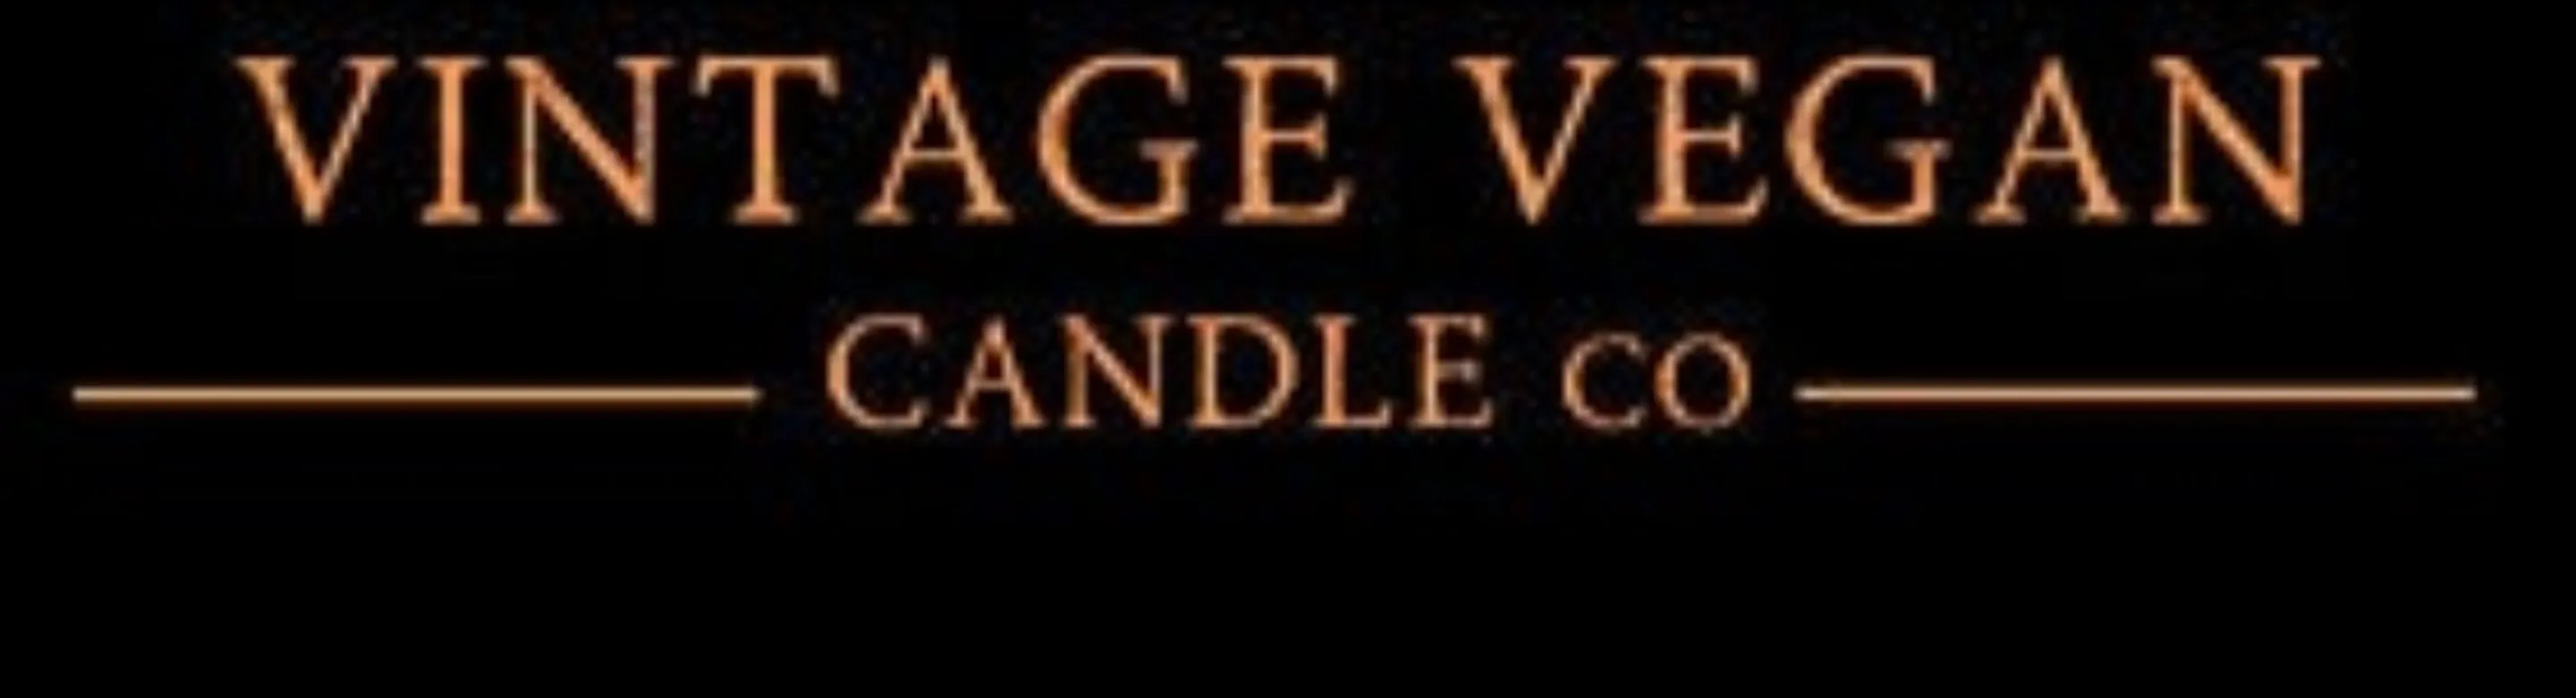 Vintage Vegan Candle Co